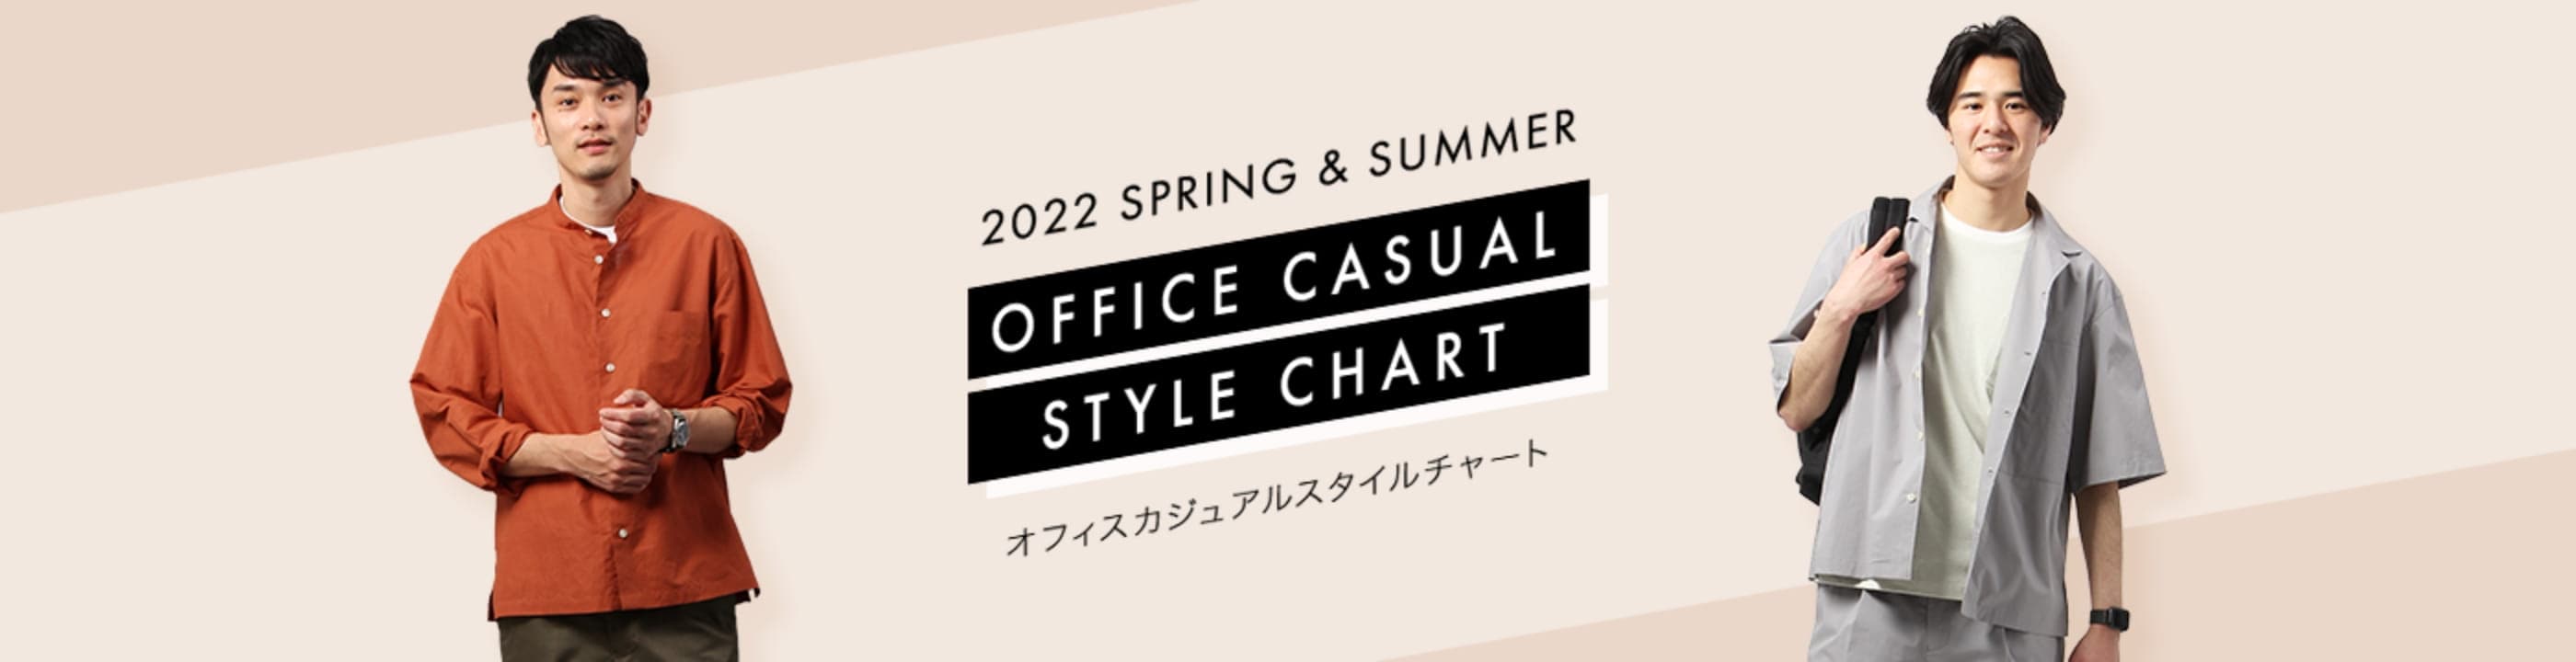 2022 SPRING & SUMMER OFFICE CASUAL STYLE CHART オフィスカジュアルスタイルチャート